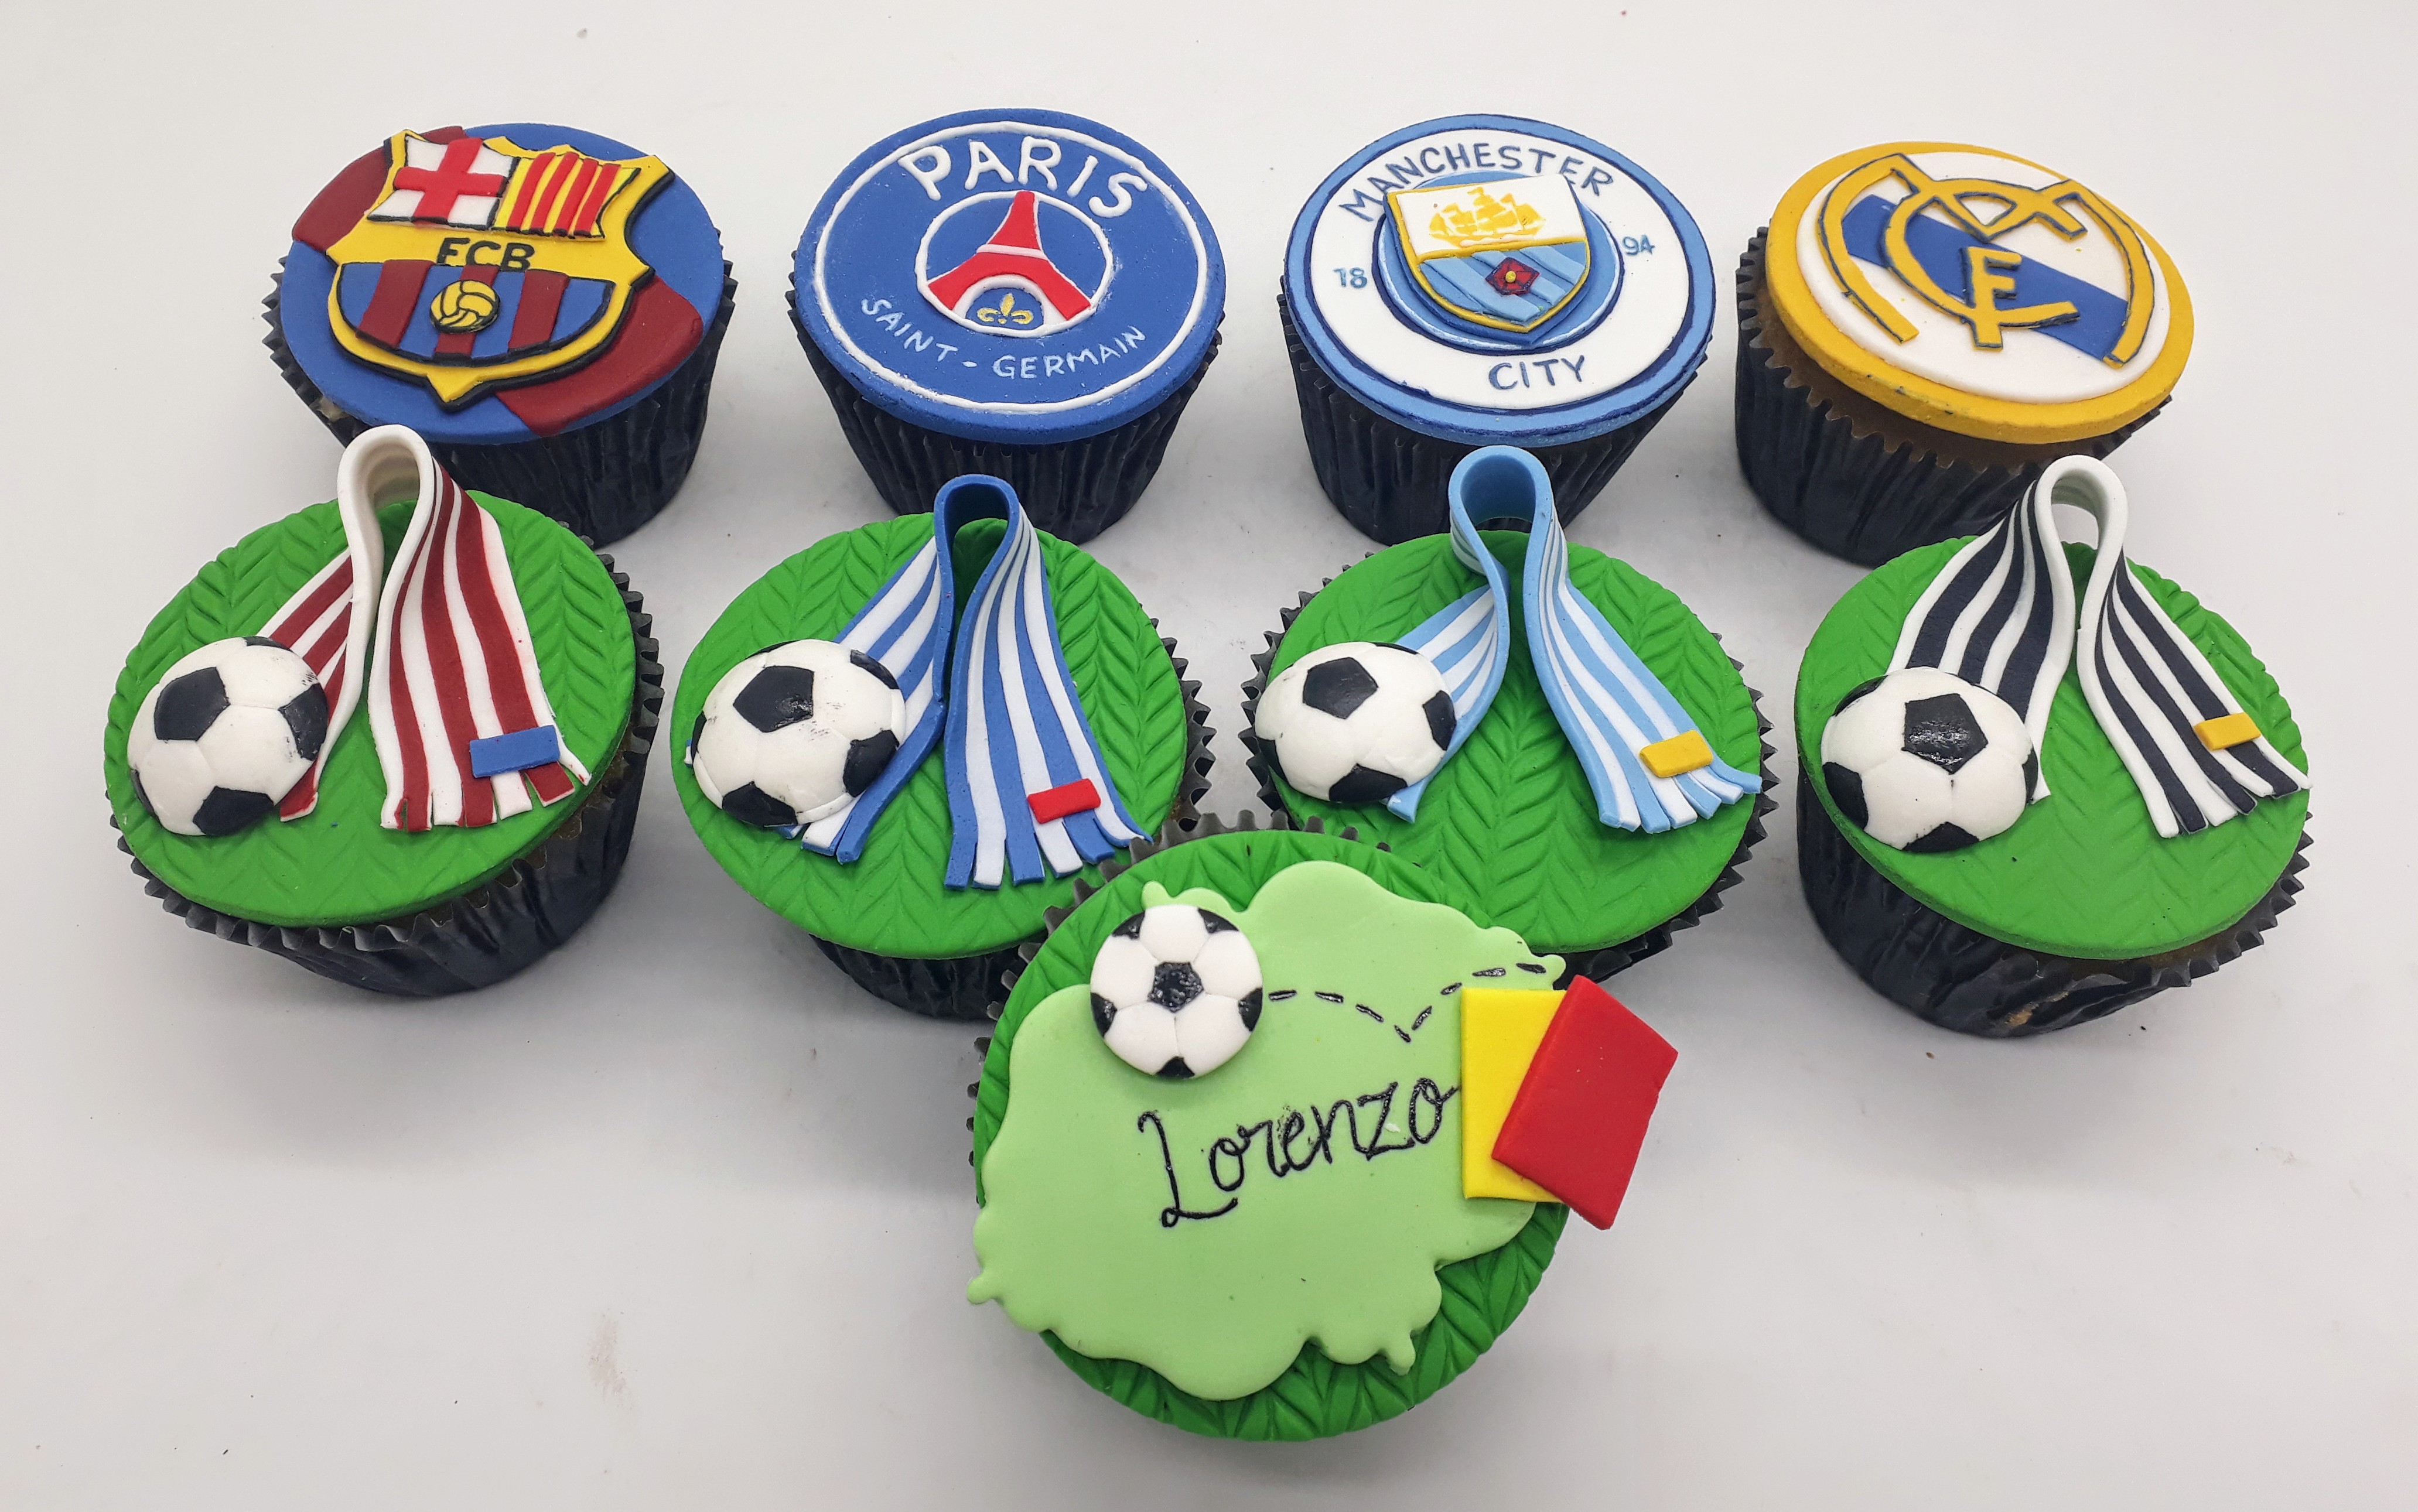 Cupcake Champions League 